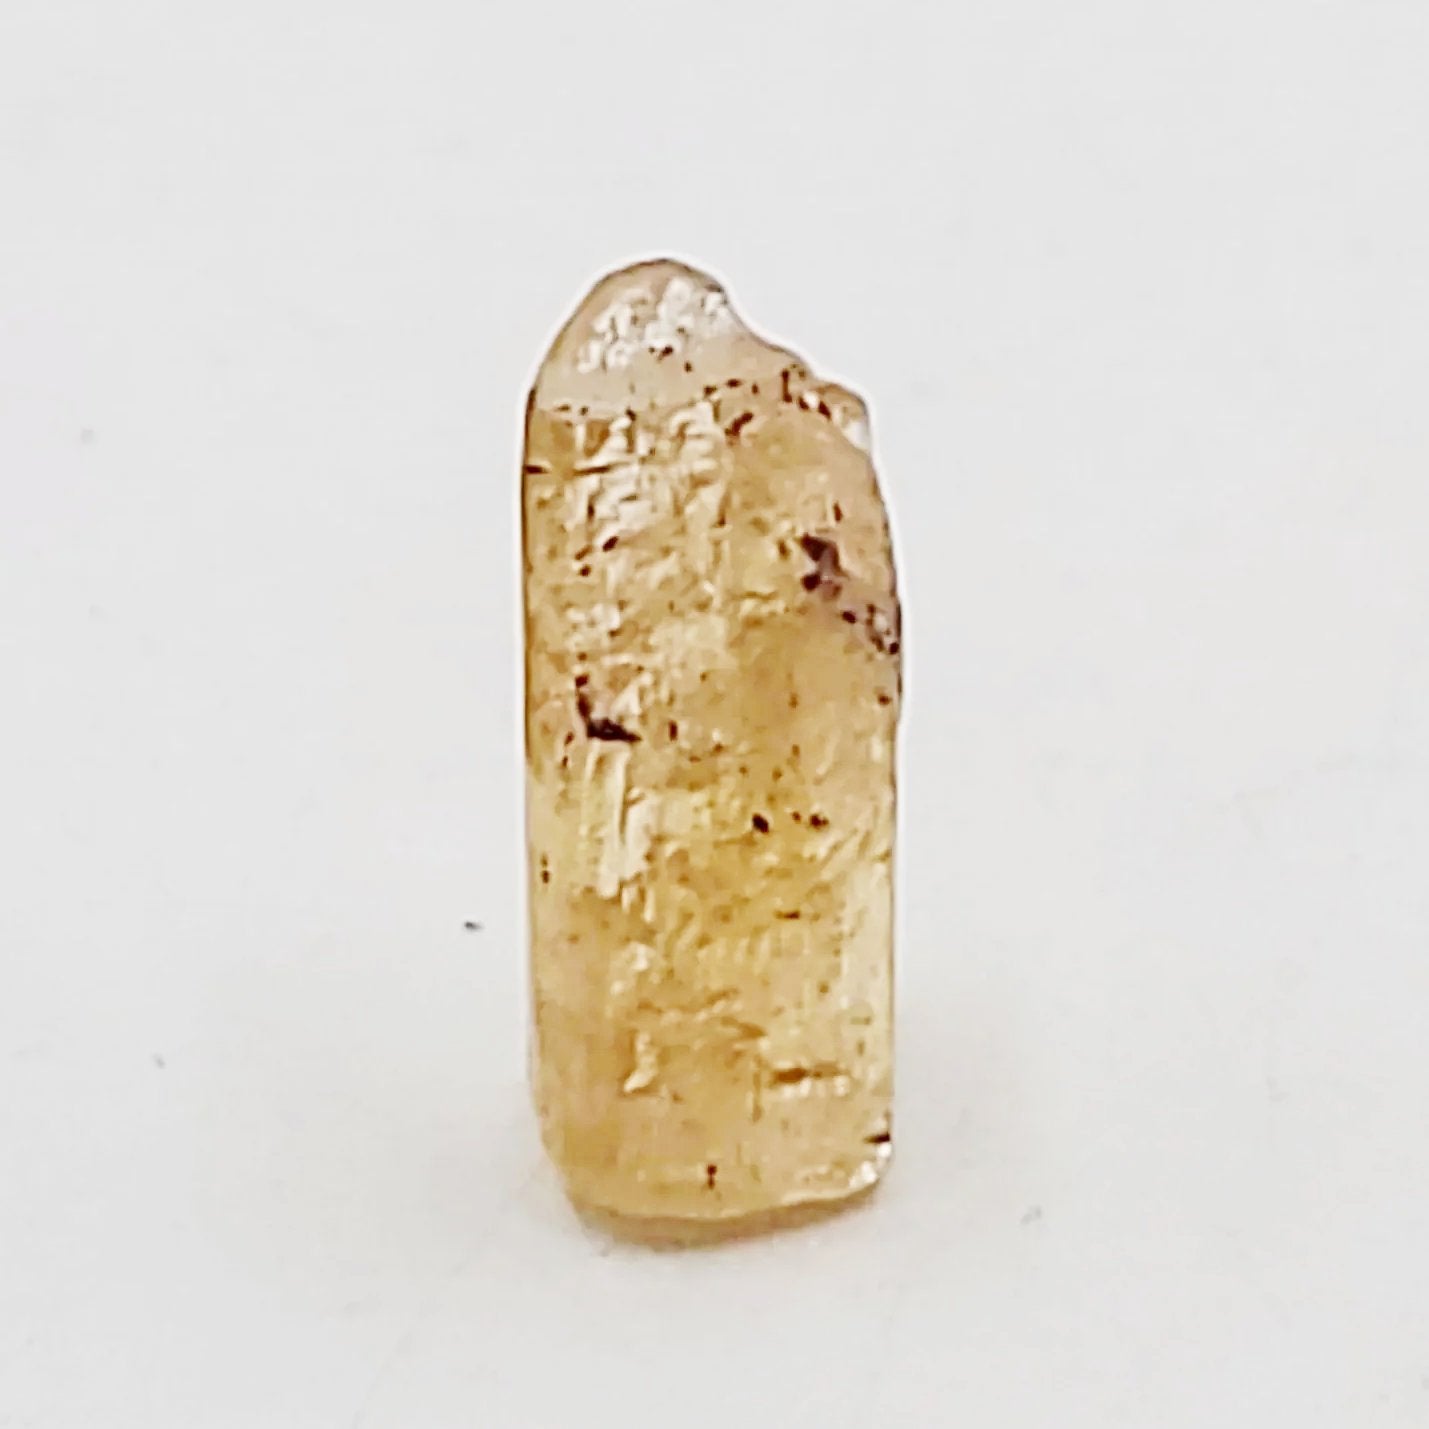 Golden Topaz Imperial Topaz Rough Gemstone 1.5g - Elevated Metaphysical